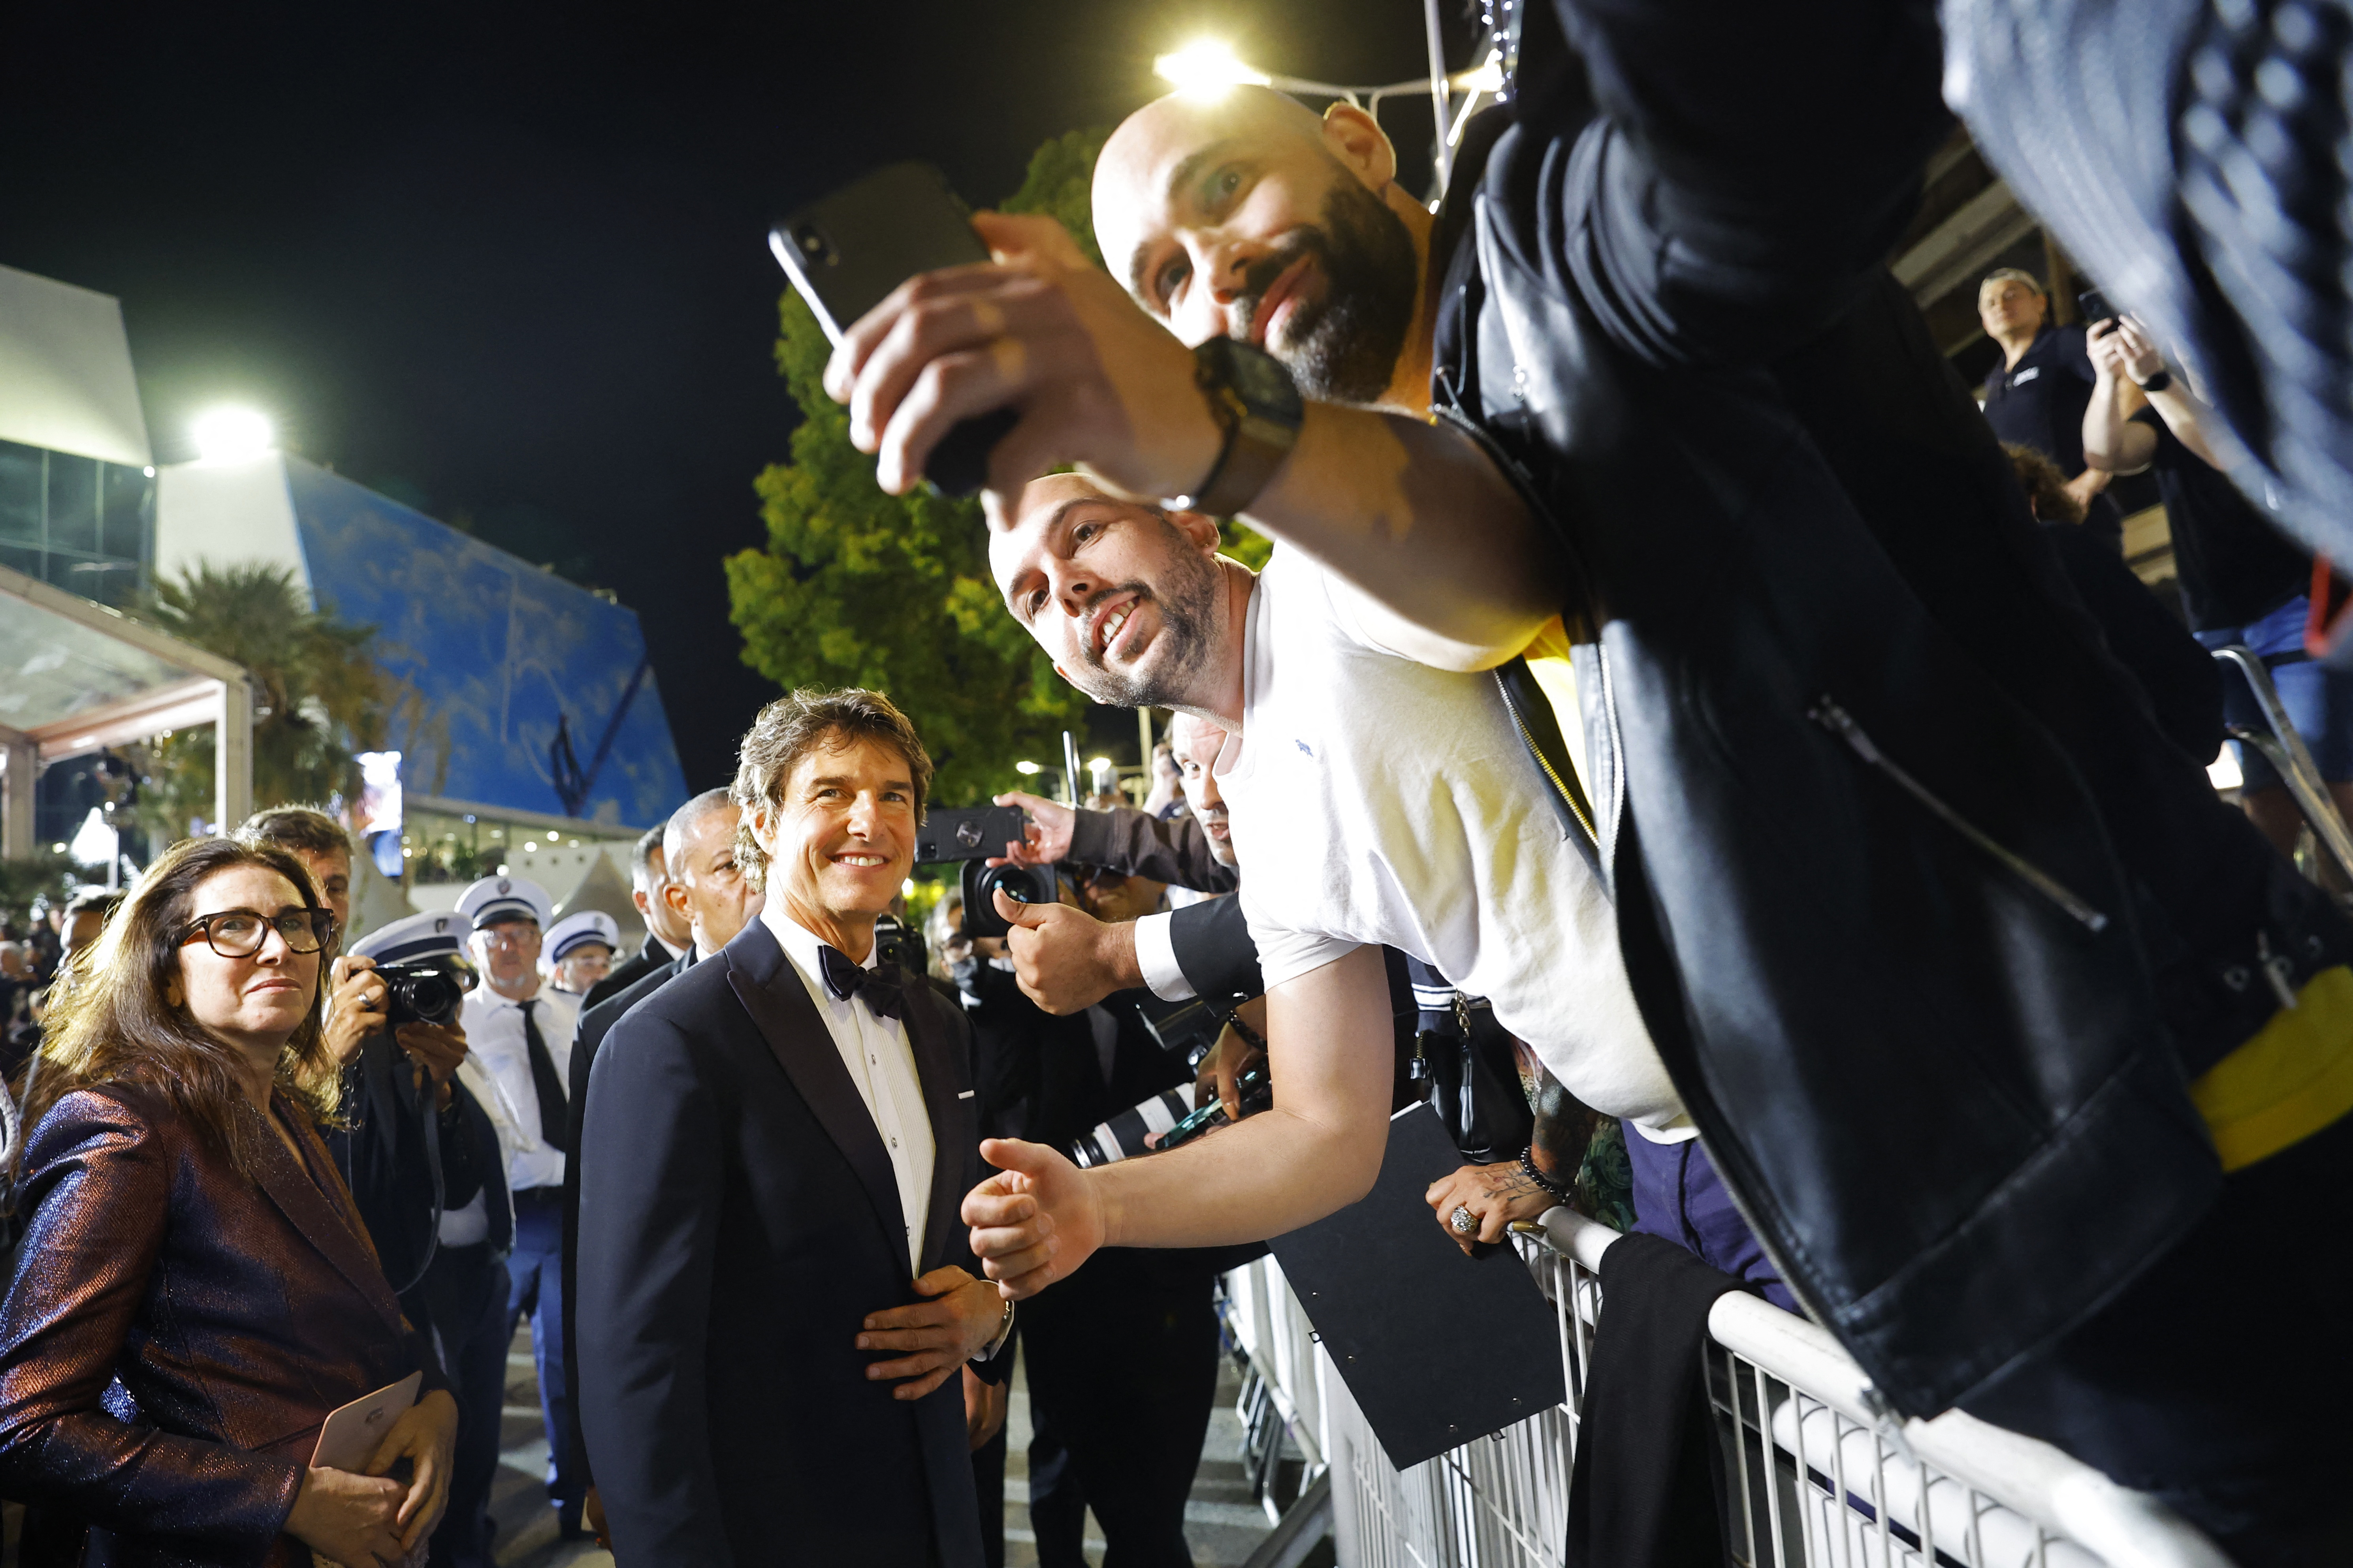 Tom Cruise, un pequeño Dios humano, posa junto a sus fans en Cannes. REUTERS/Stephane Mahe